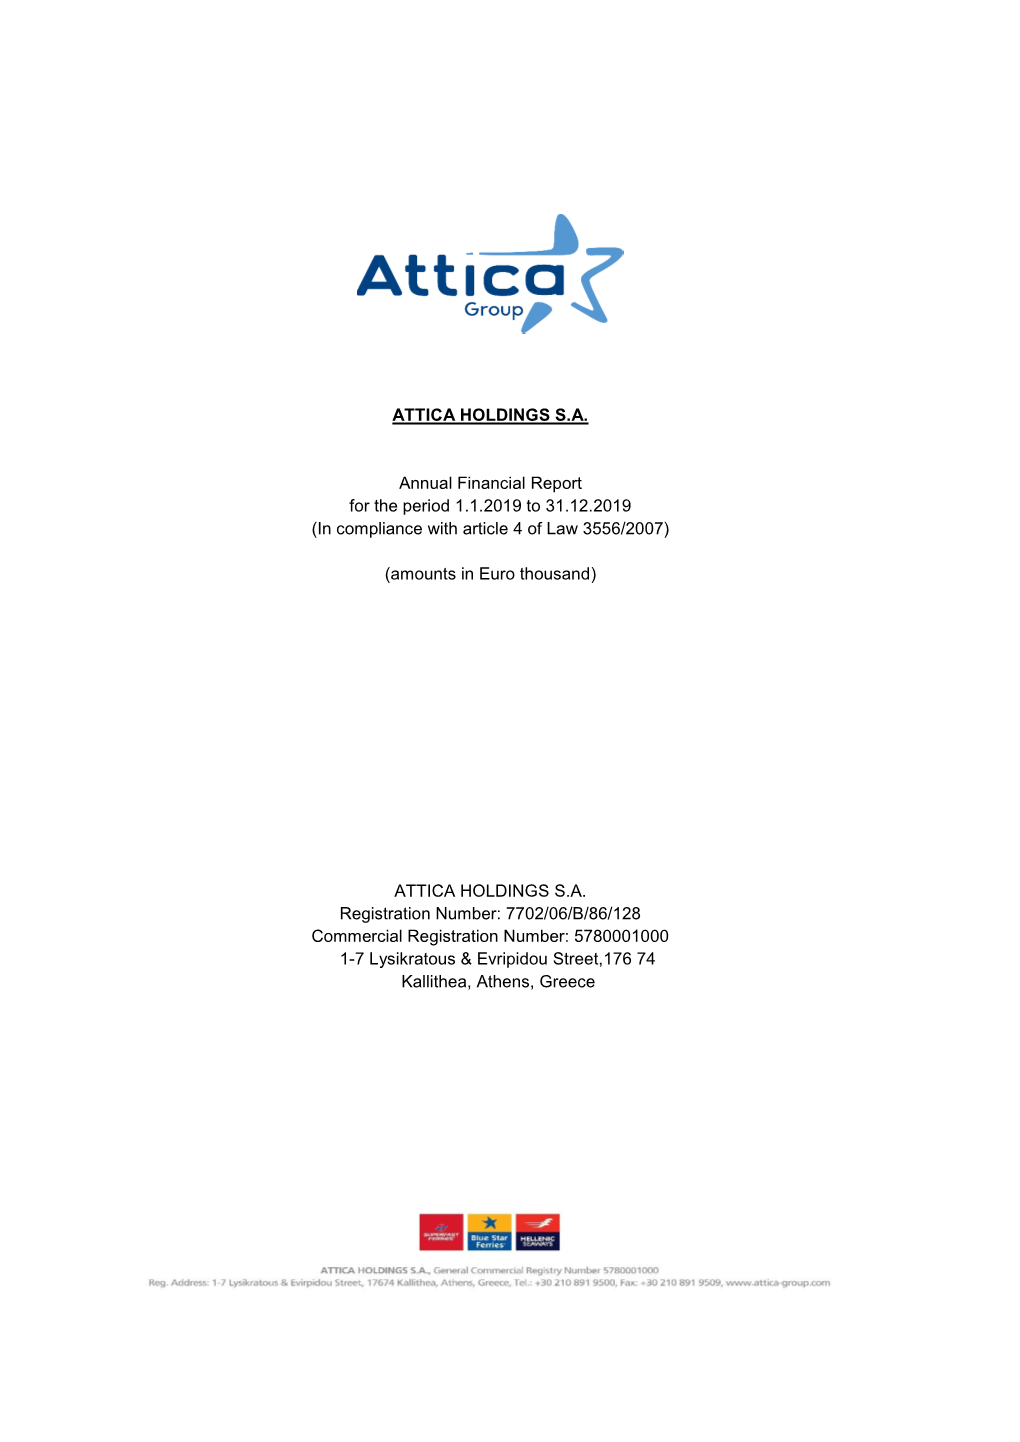 ATTICA HOLDINGS SA Annual Financial Report For